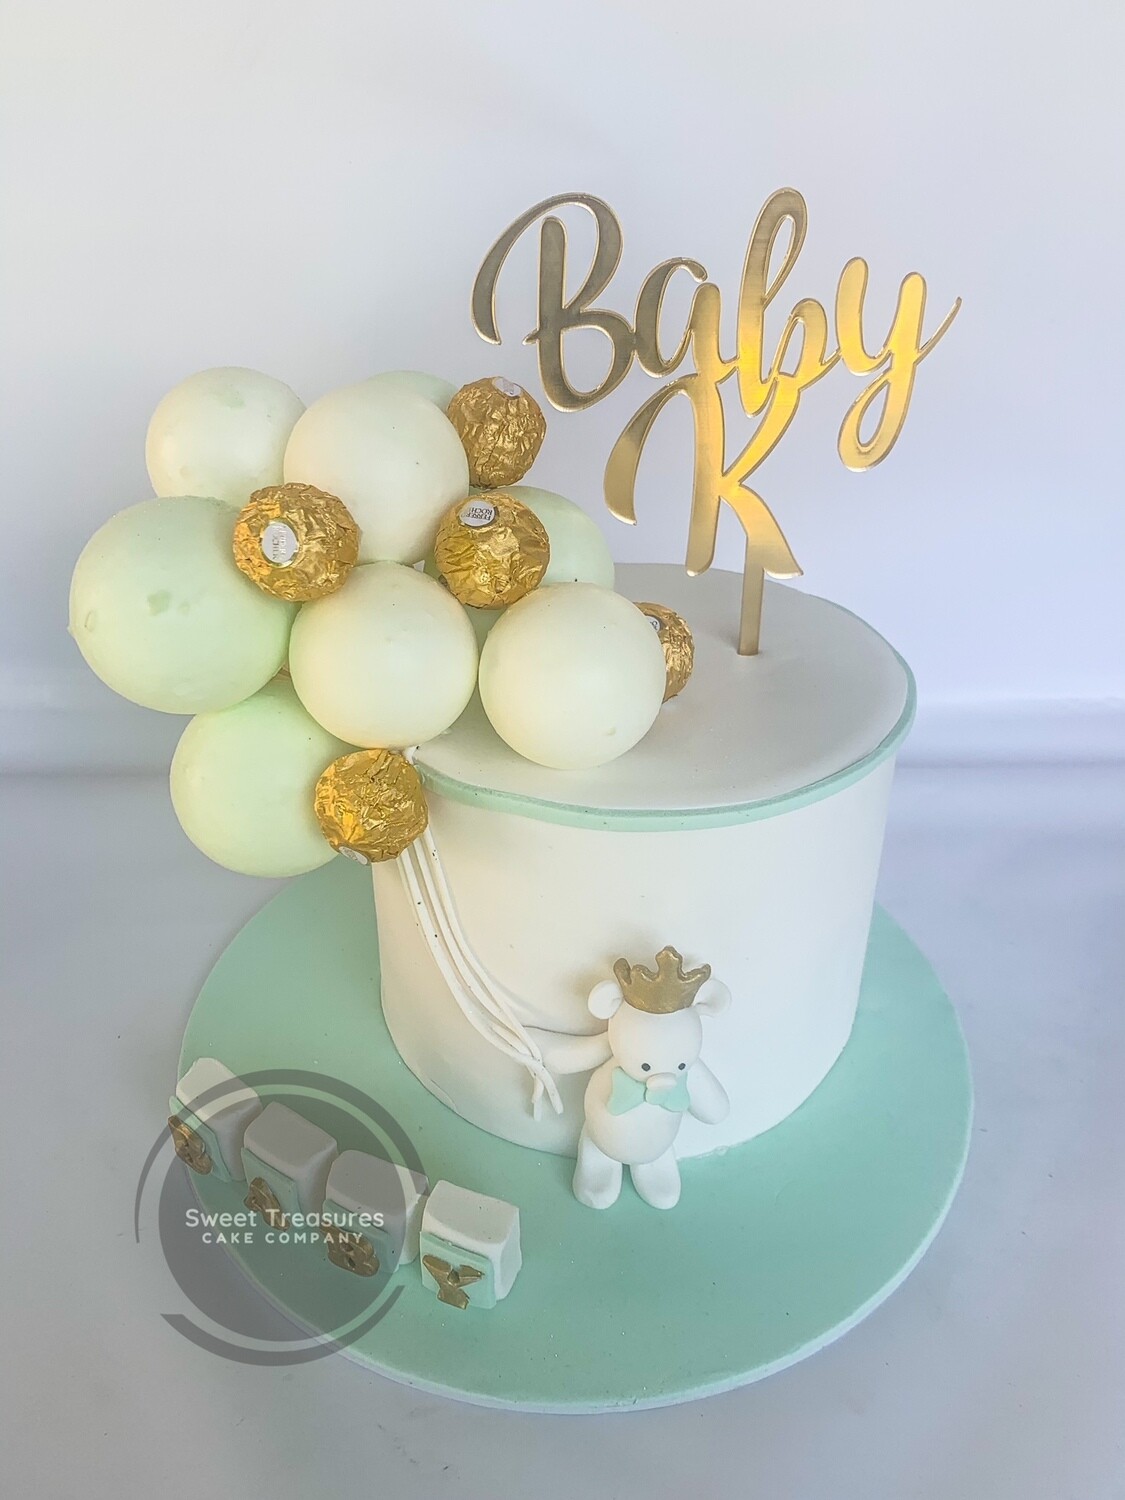 Chocolate spheres babyshower Single tier cake